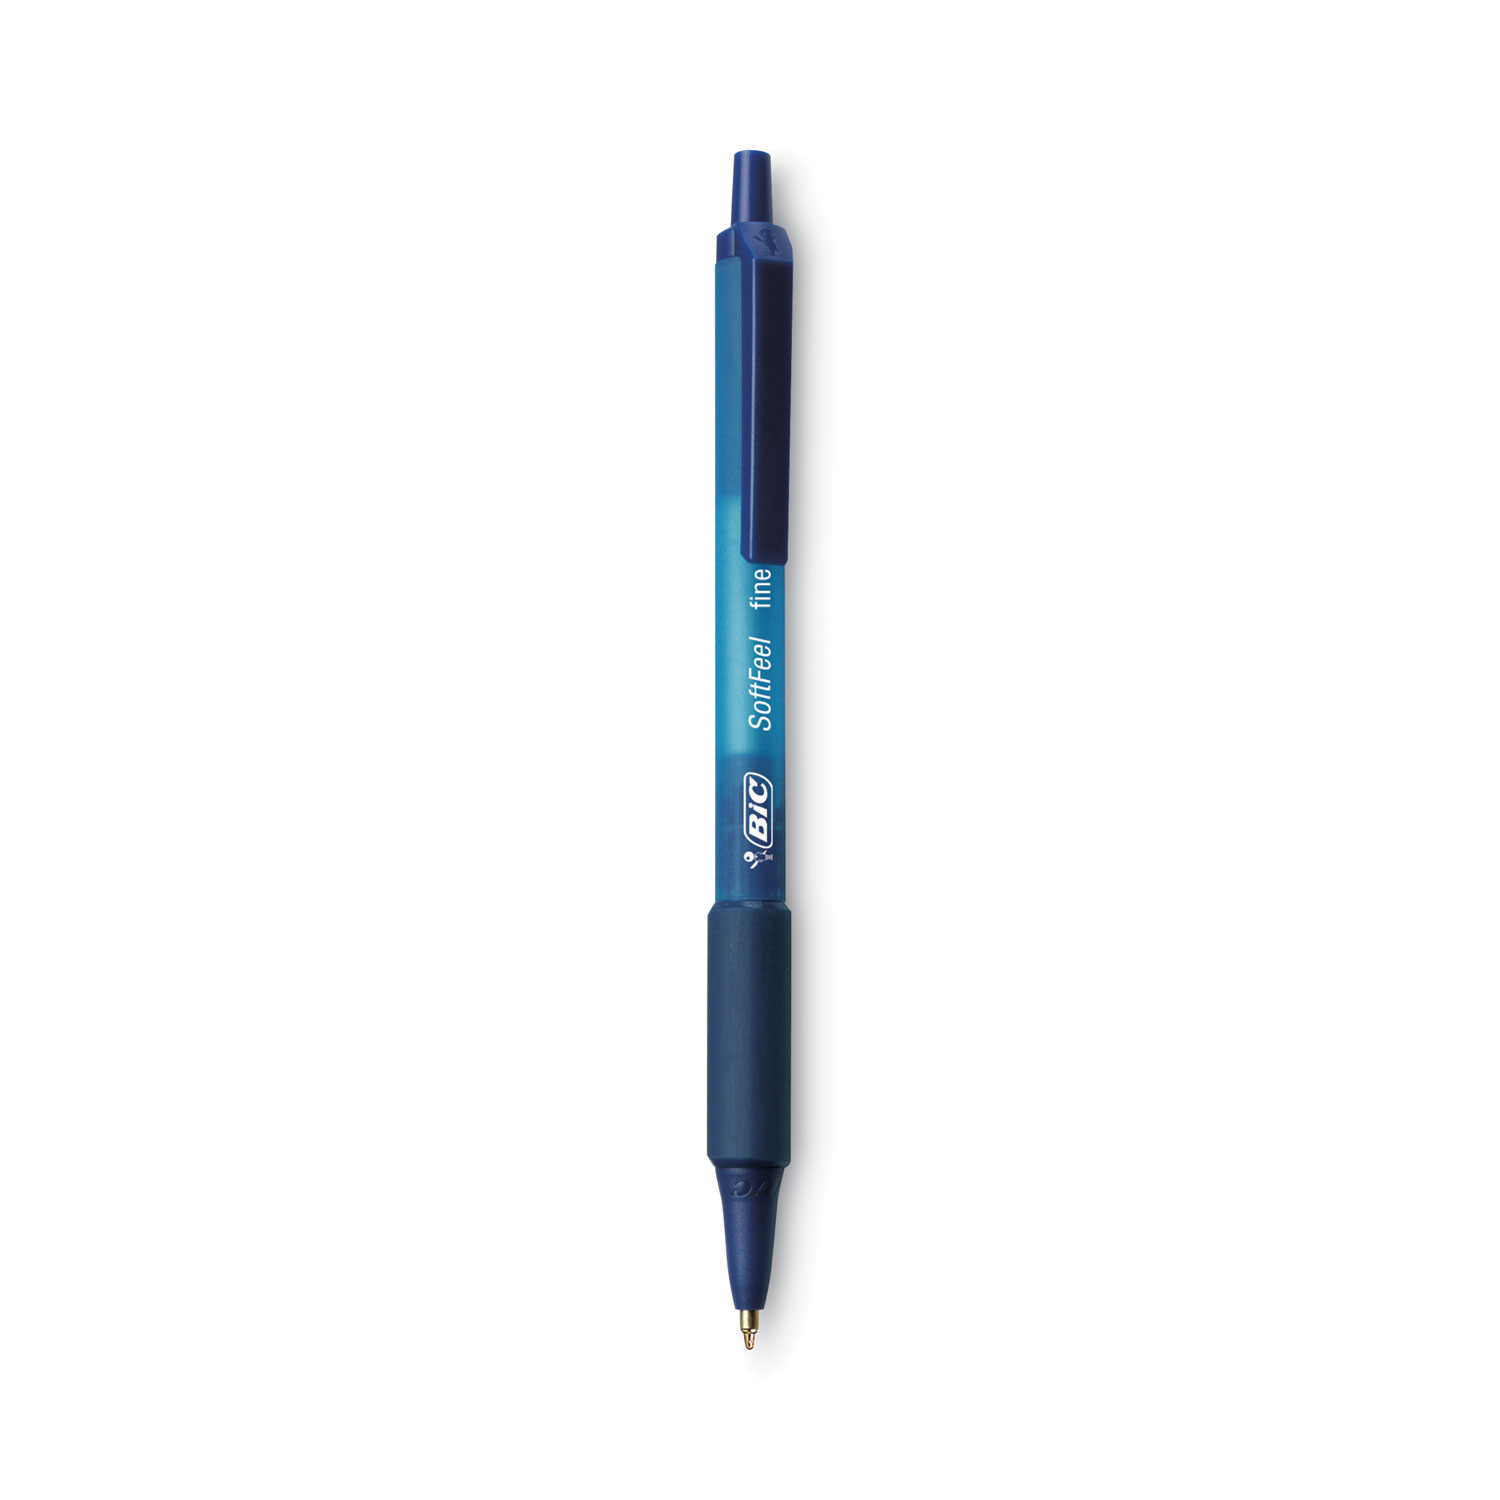 Soft Feel Ballpoint Pen, Retractable, Medium 1 mm, Blue Ink, Blue Barrel, Dozen